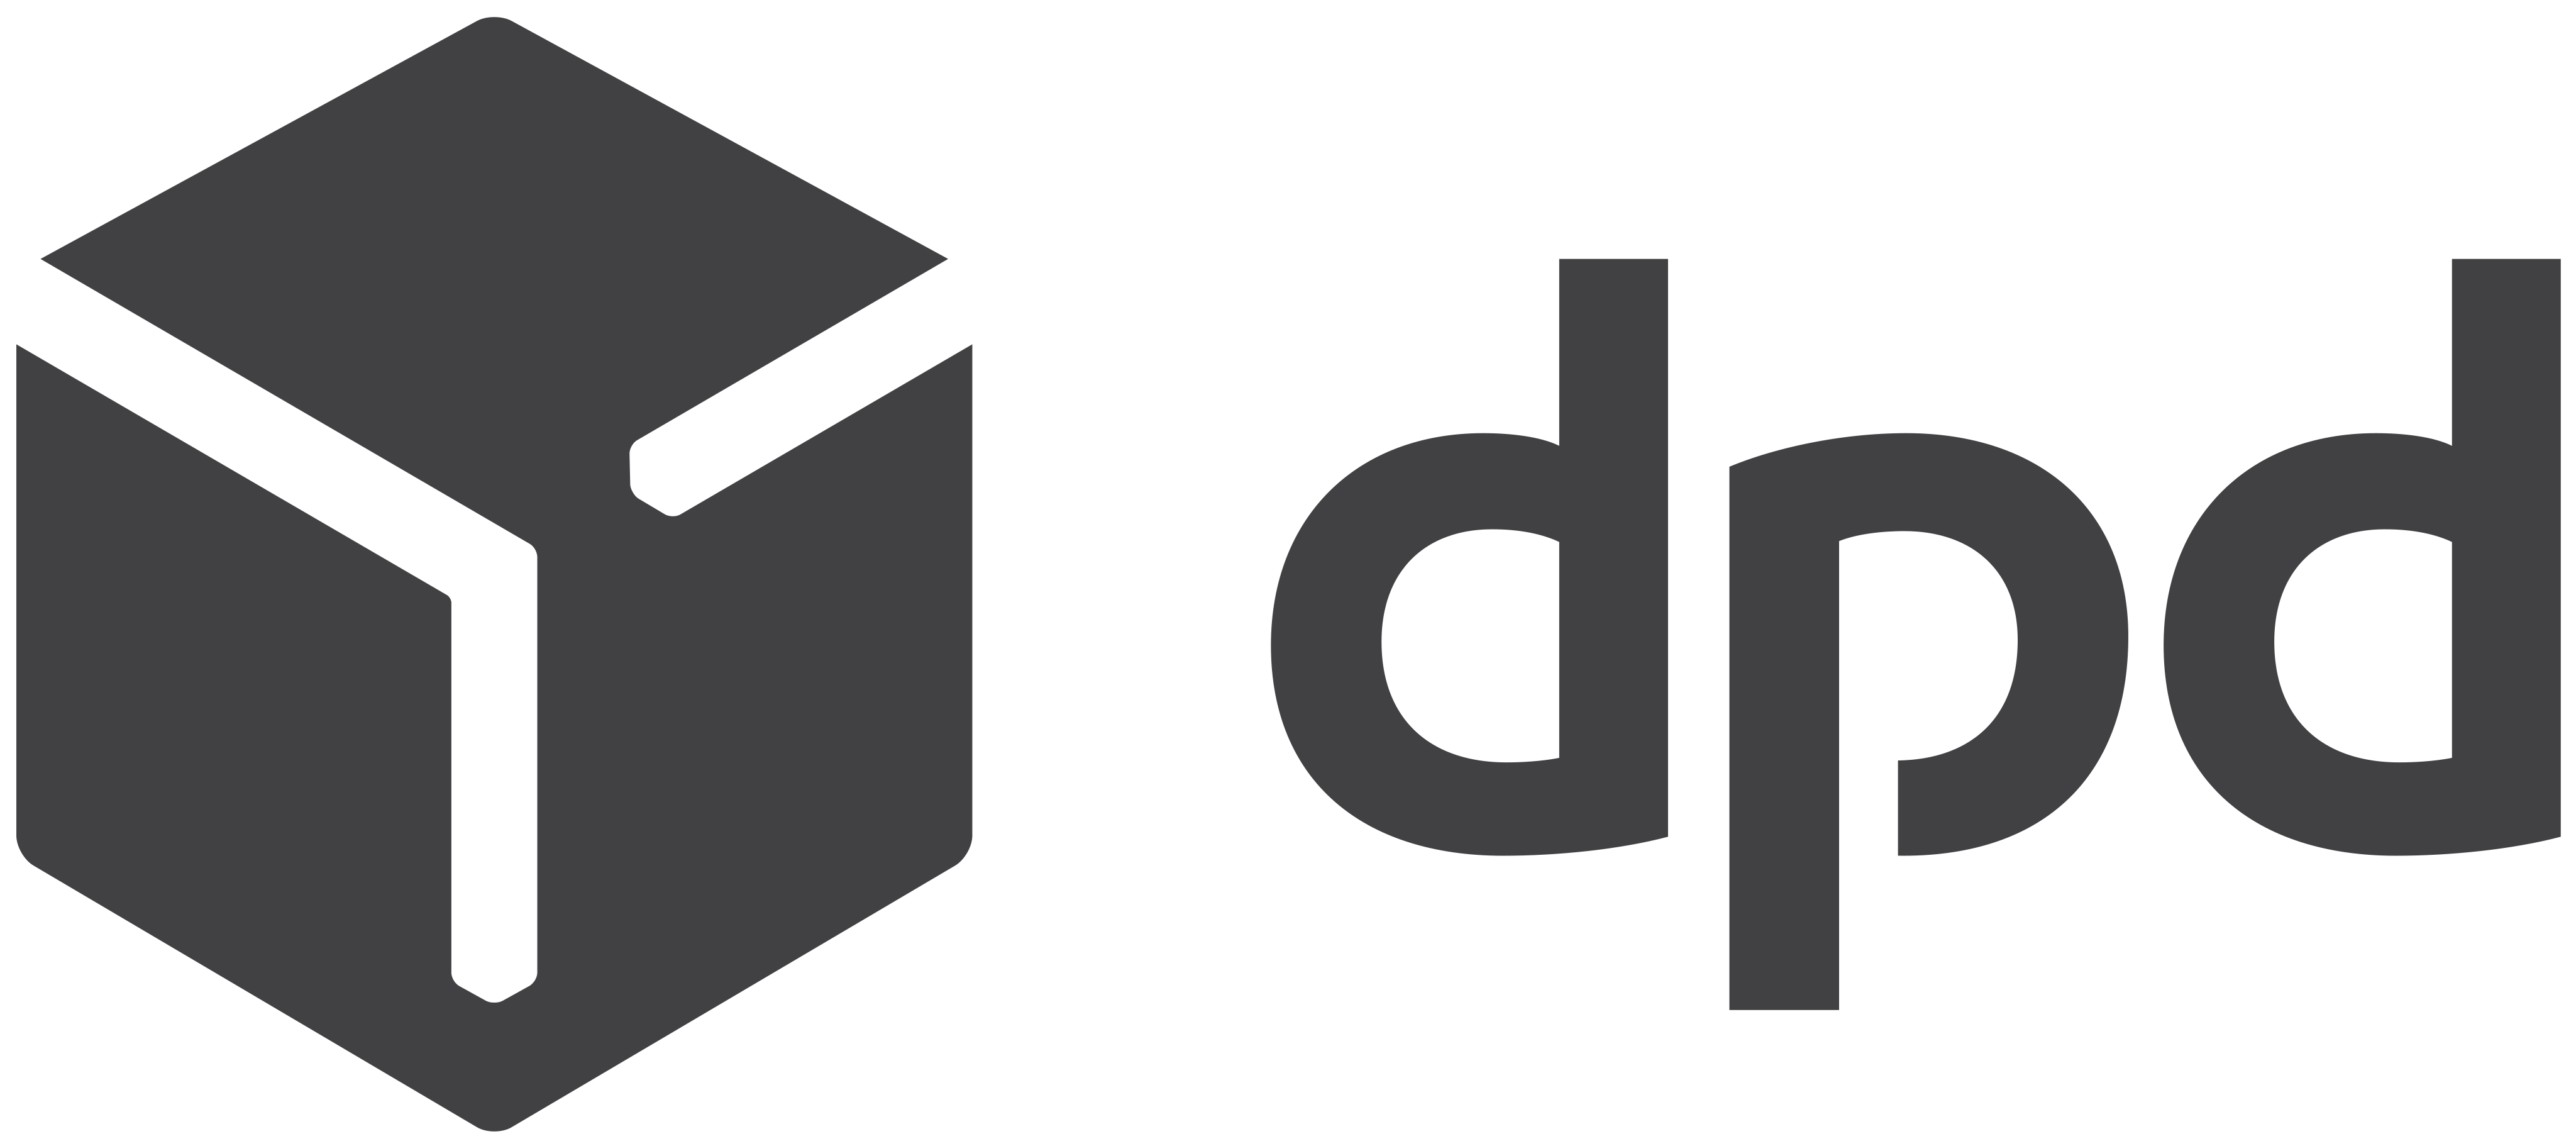 dpd logo black